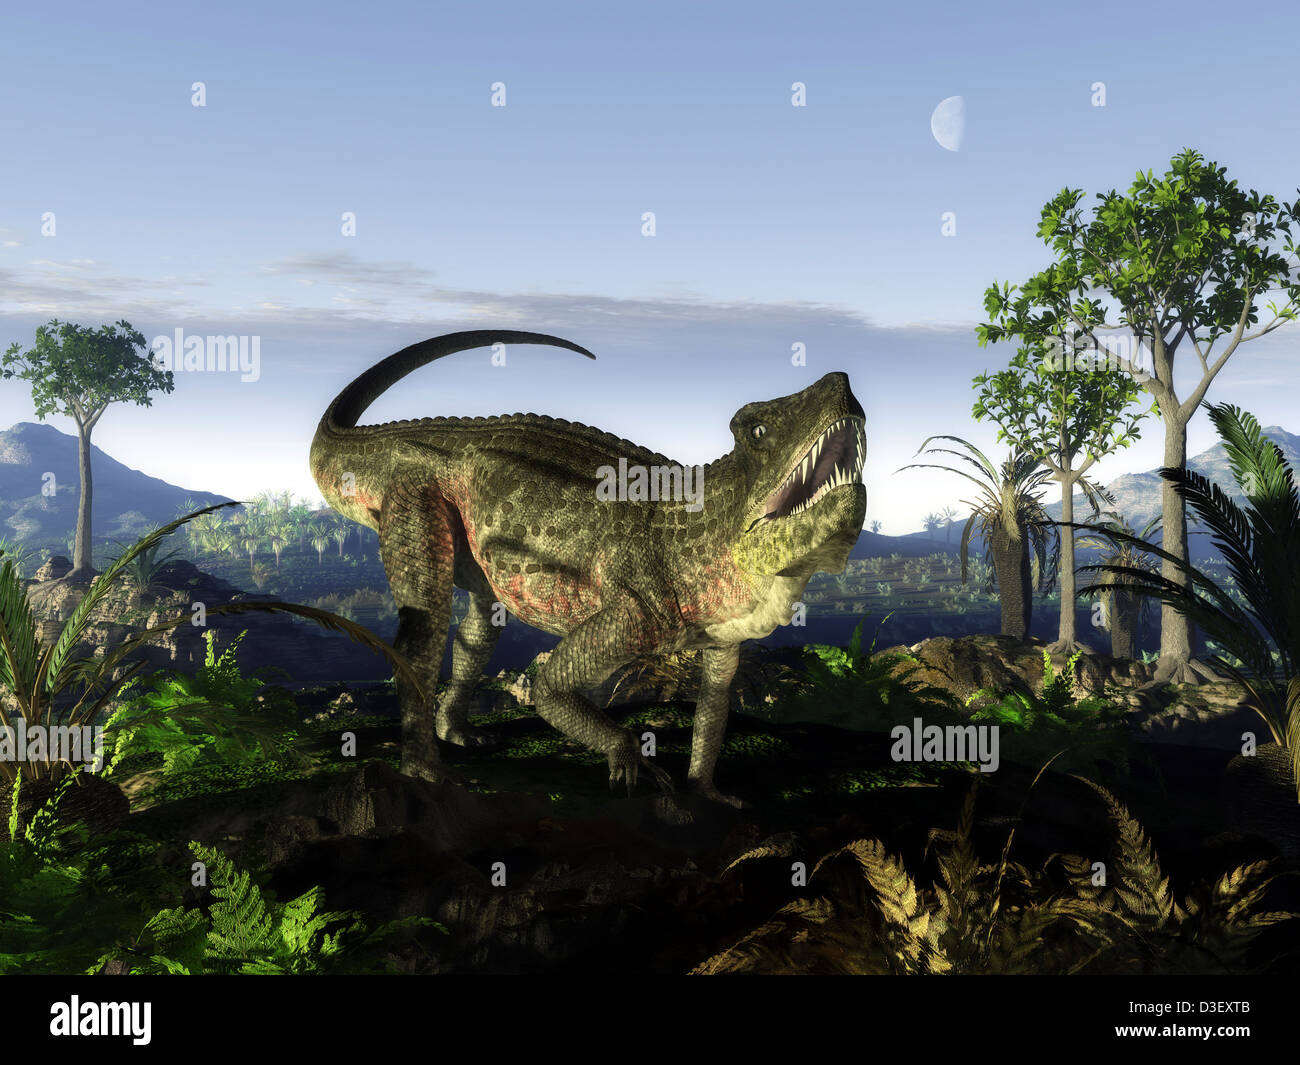 An archosaur of the genus Postosuchus wanders in a prehistoric landscape. Stock Photo